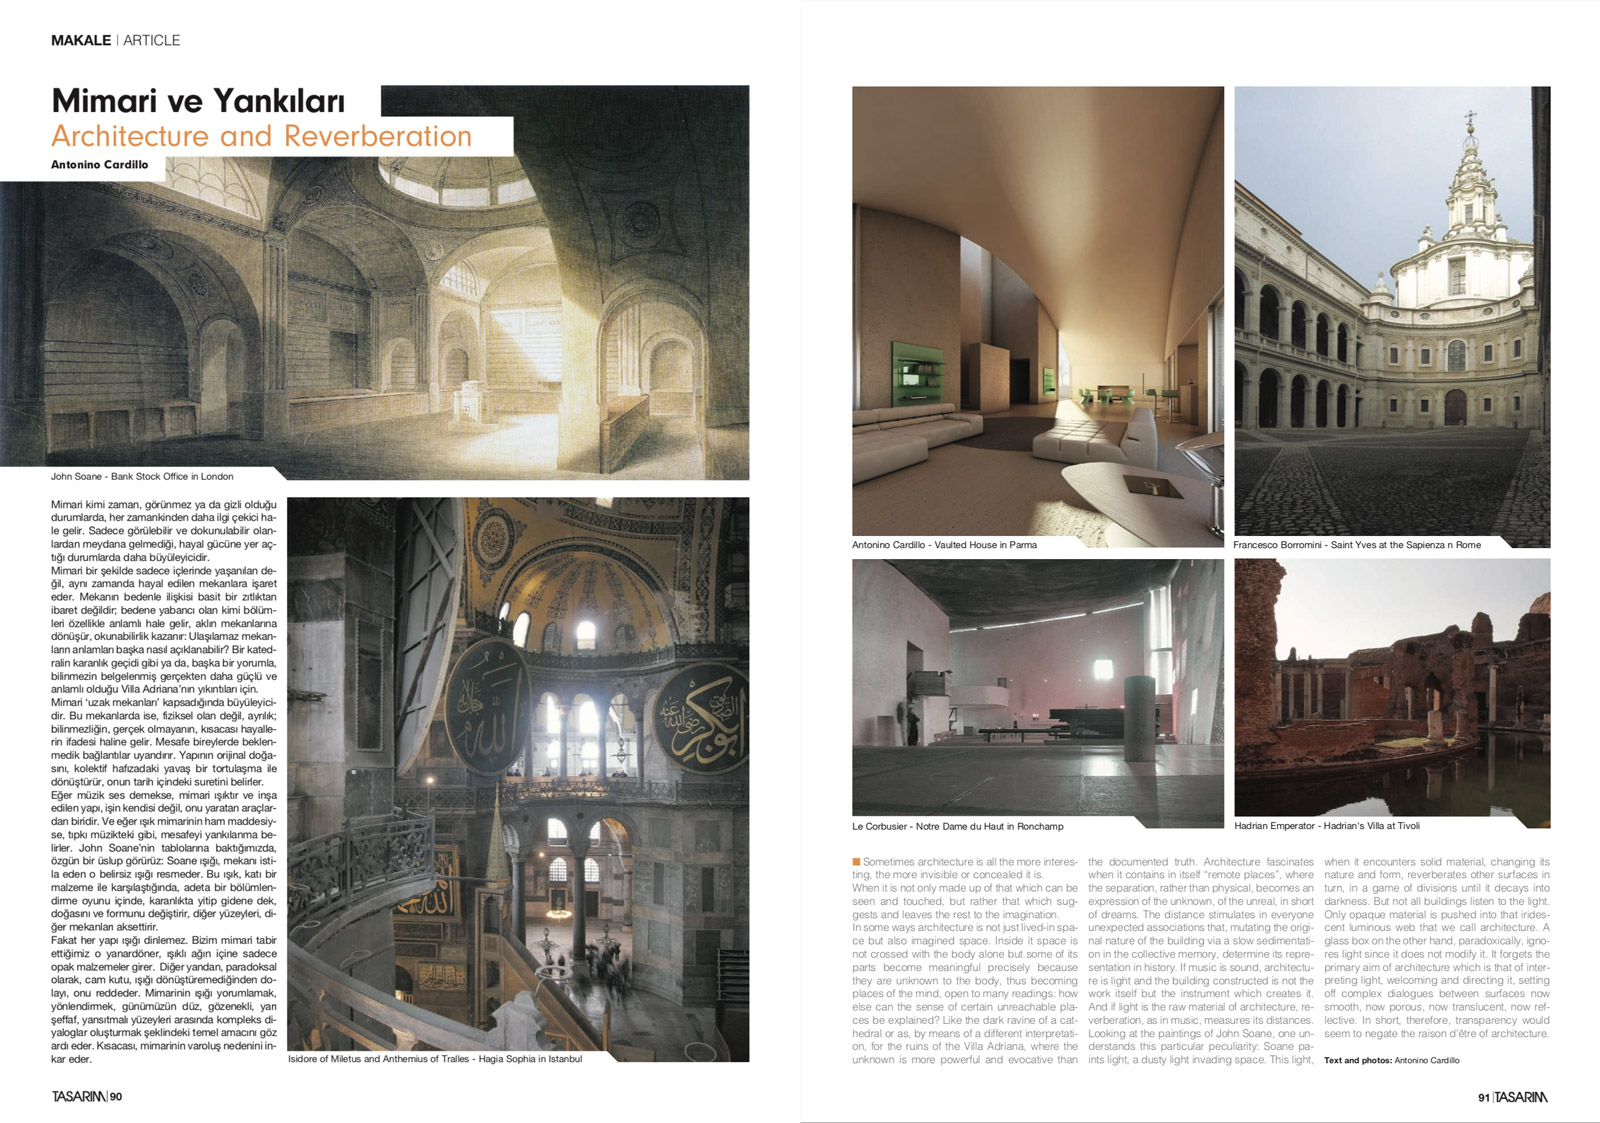 Architecture and reverberation, Tasarim, no. 194, pp. 90–91. Photography: Antonino Cardillo